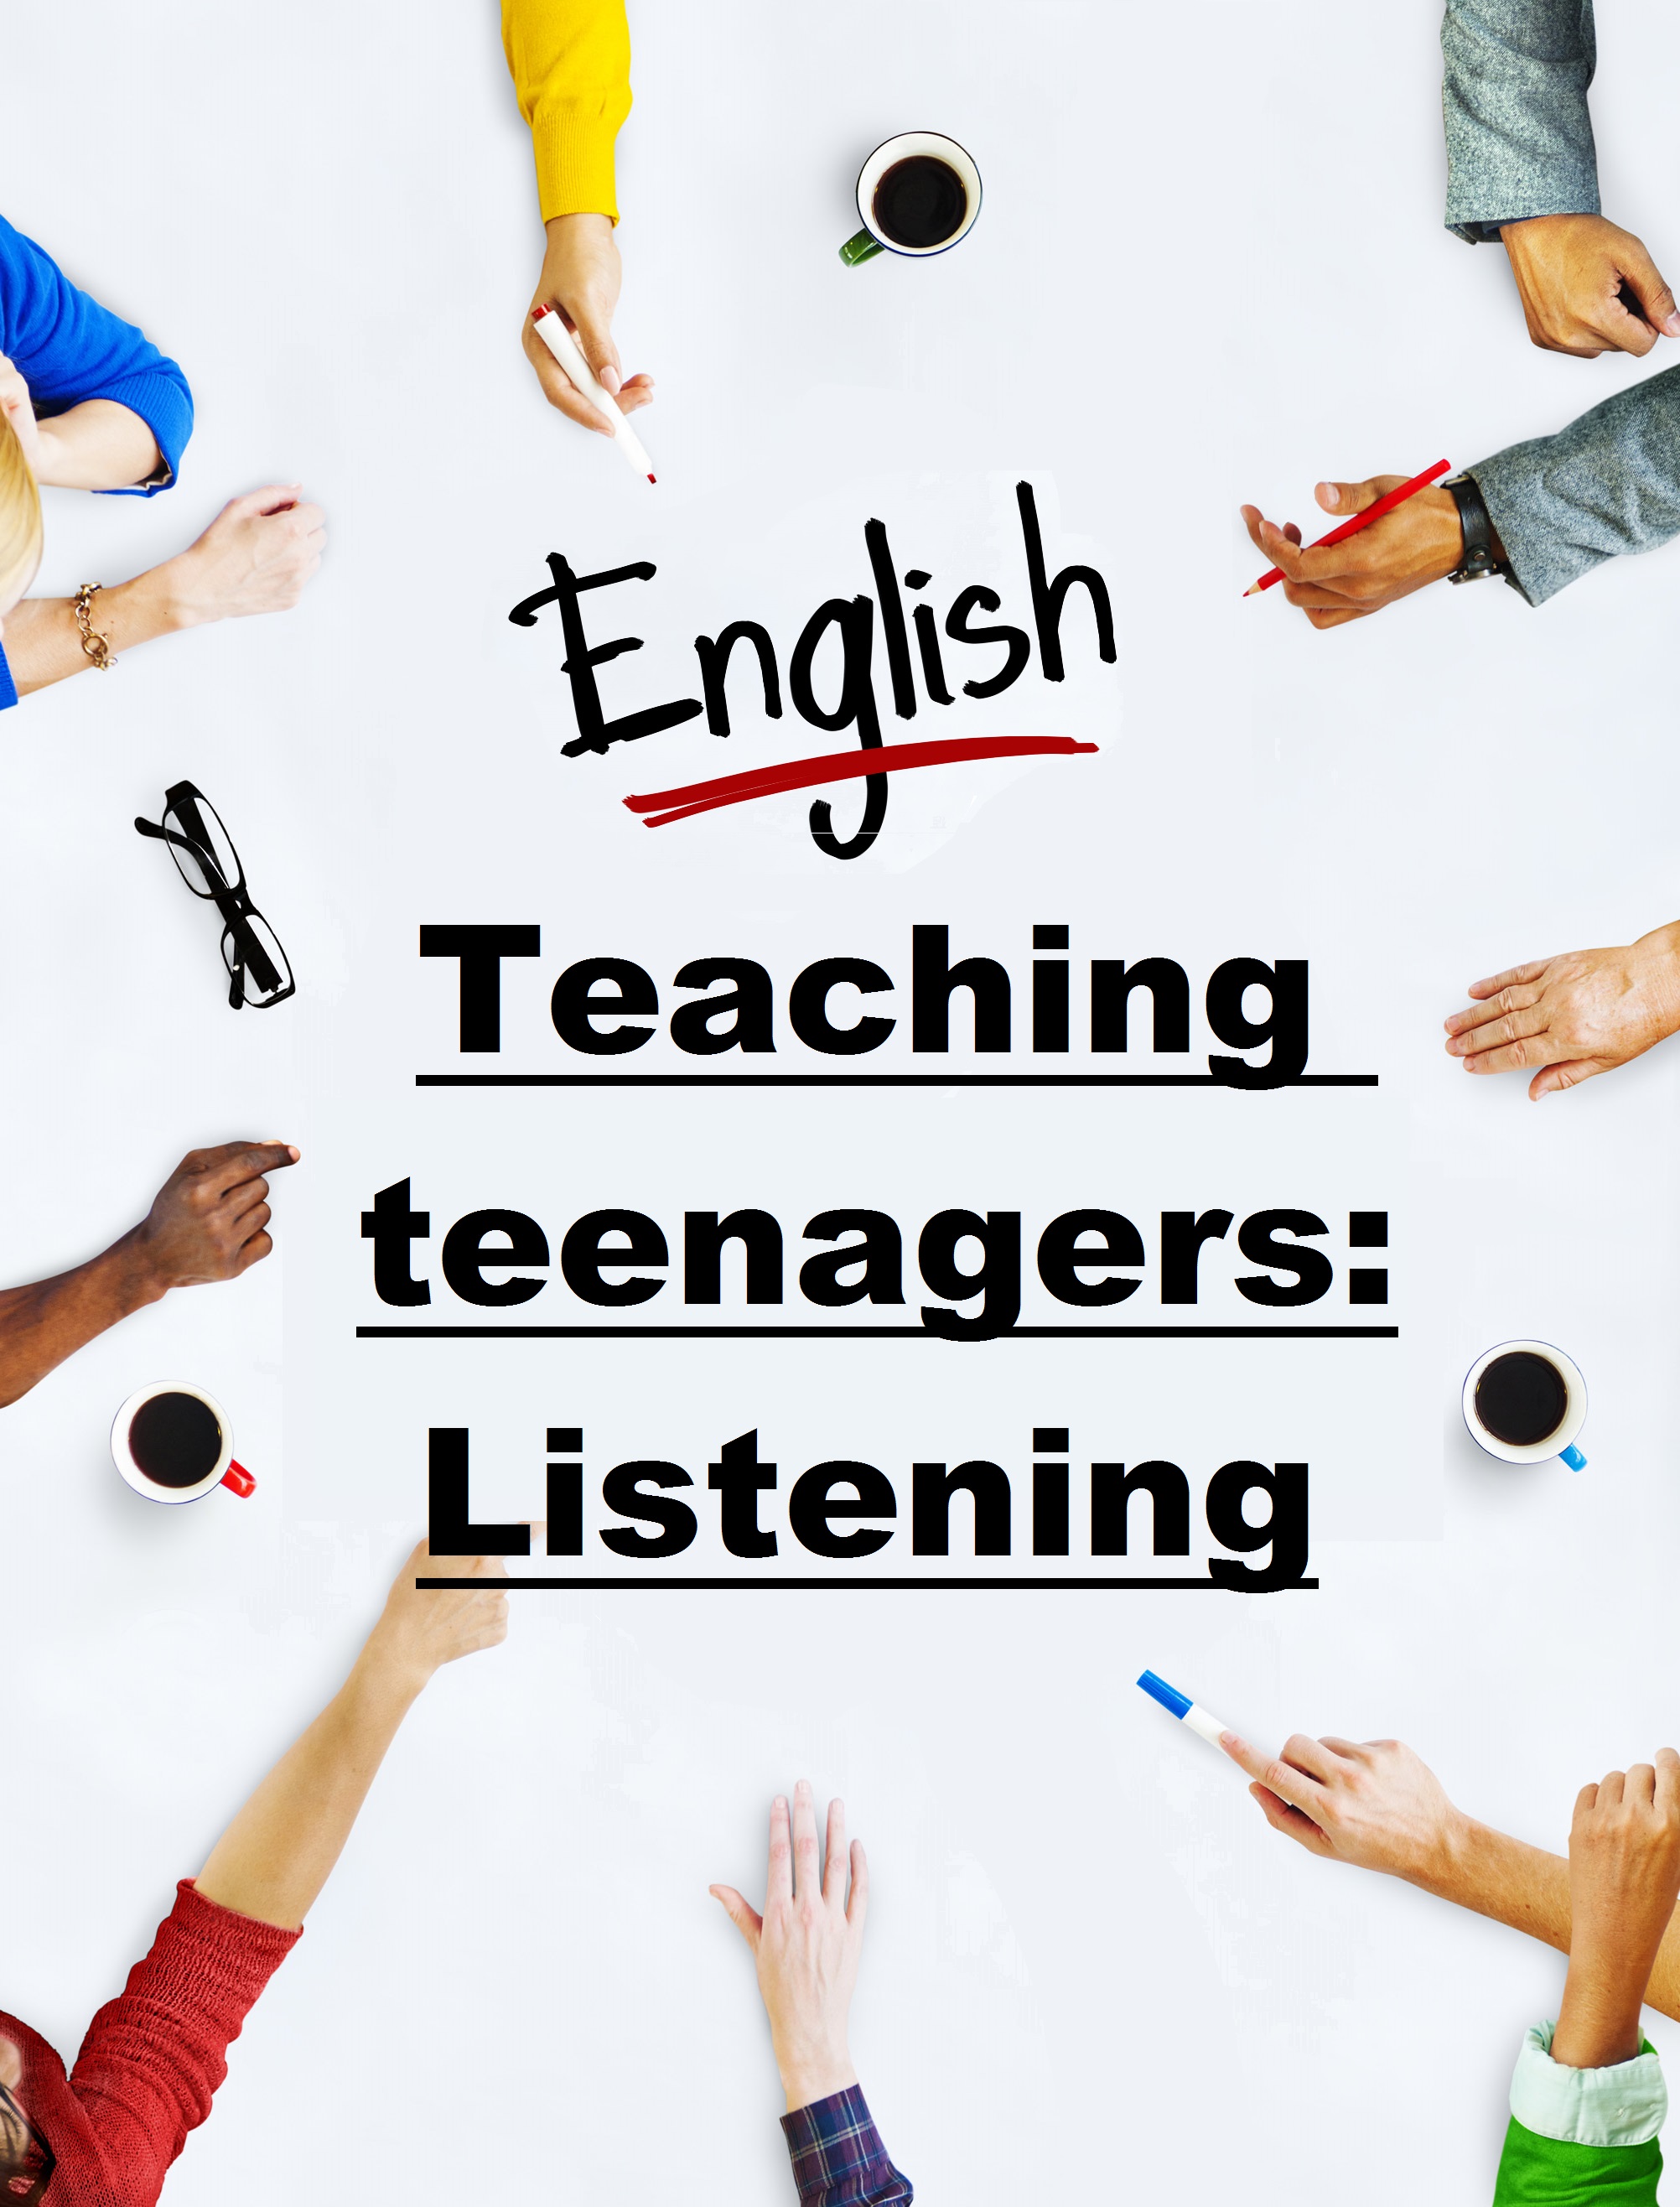 Запись вебинара "Teaching teenagers: Listening lessons that engage ears and minds"